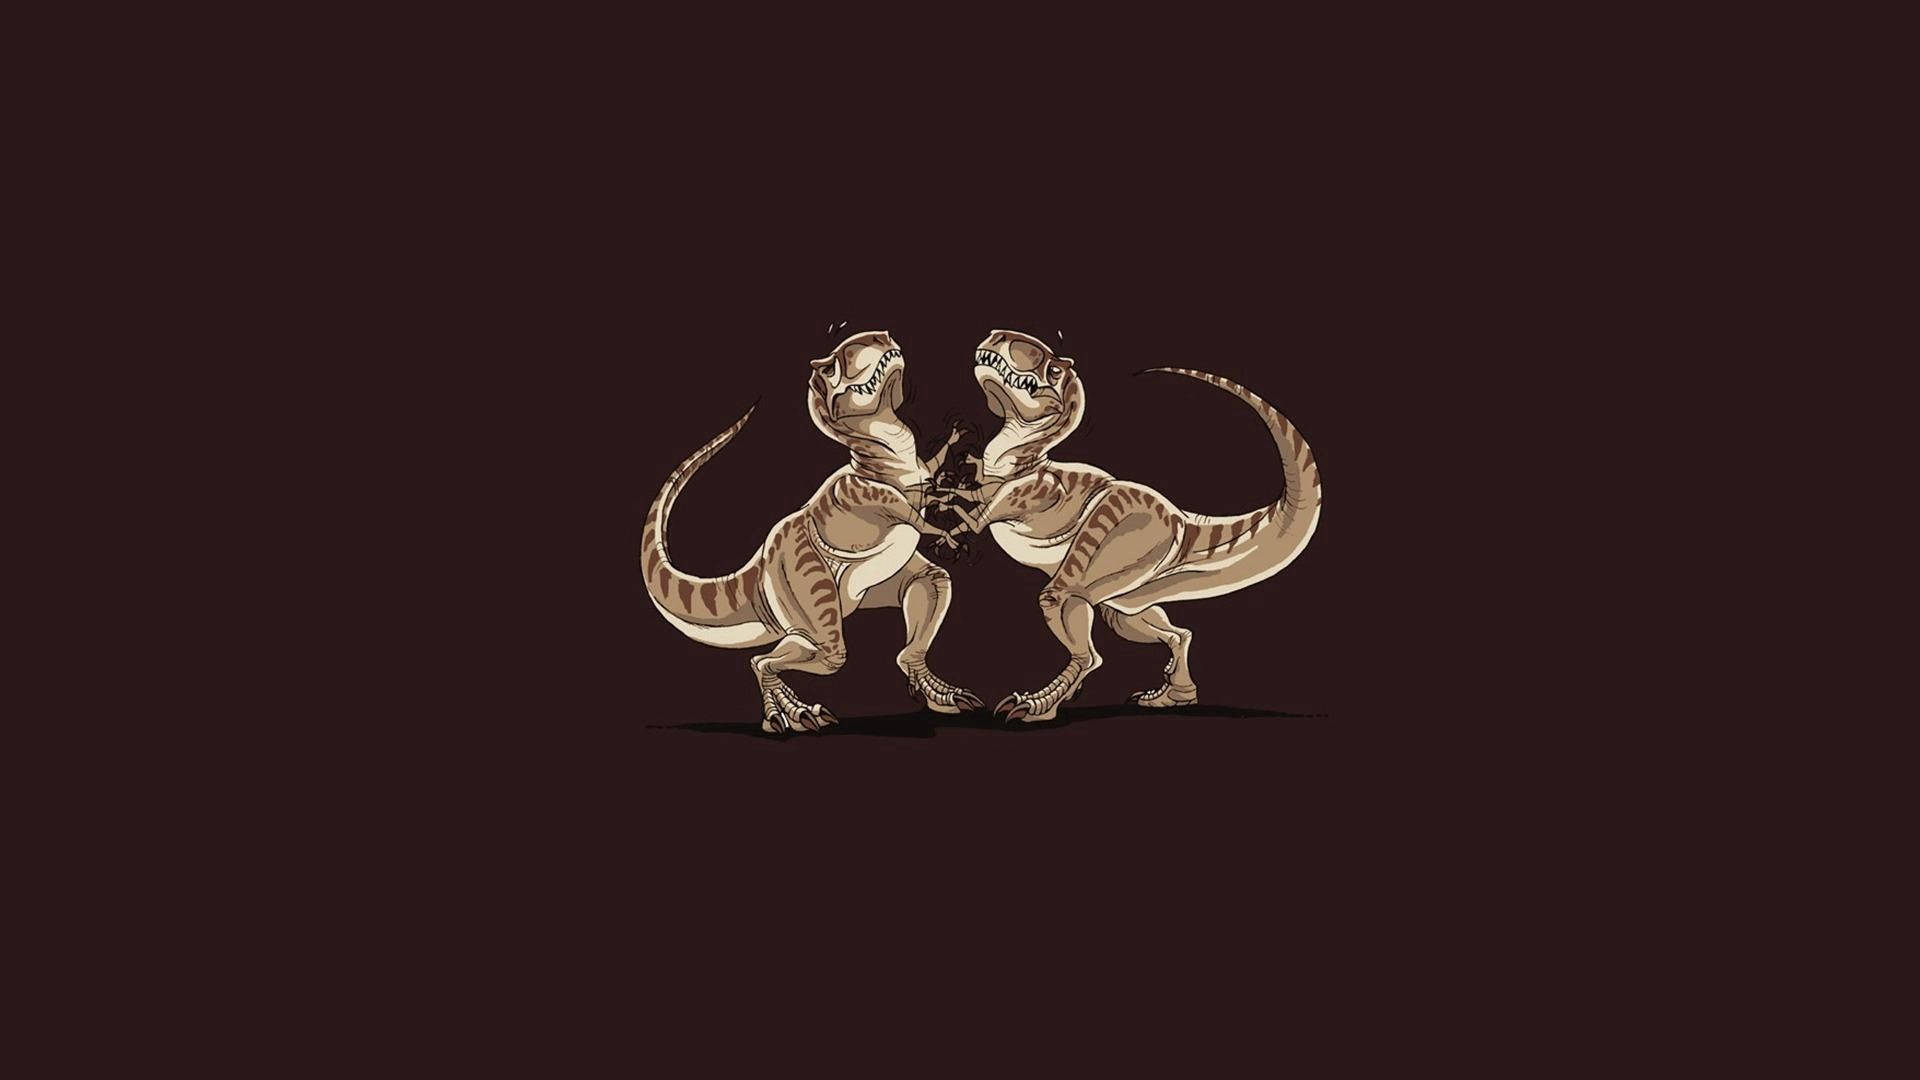 Hd Cartoon Art Of Dinosaur Background